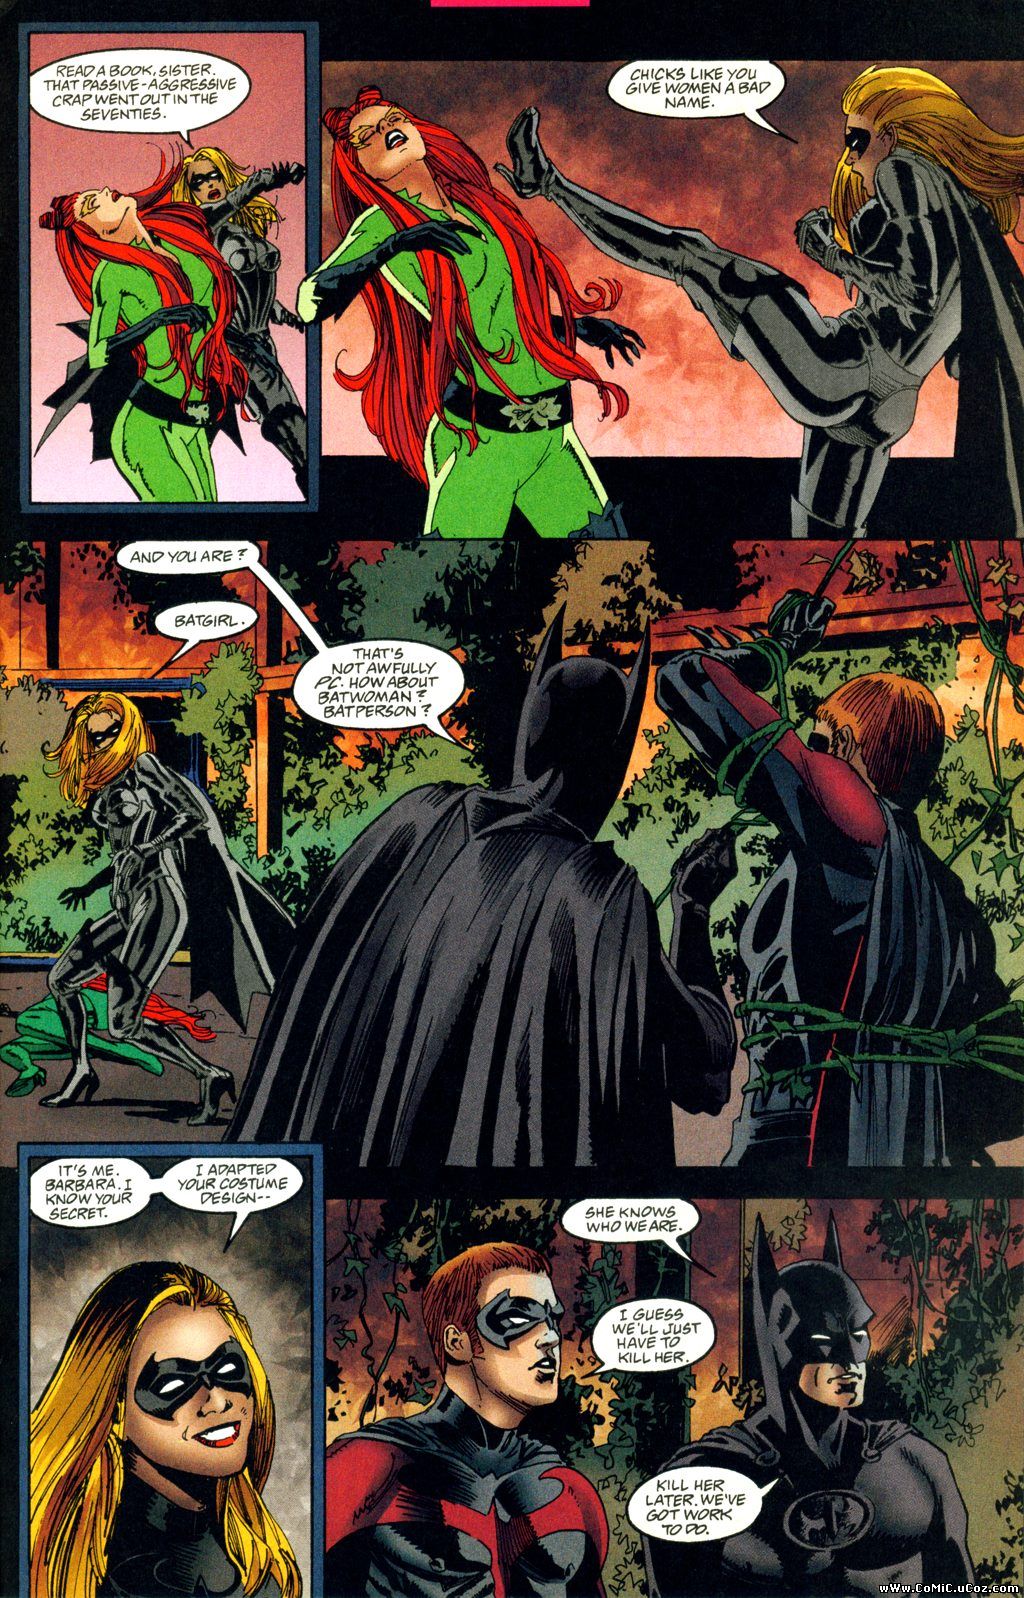 Image Poison Ivy Defeated Comic Adaptation Batman Wiki Fandom Powered By Wikia